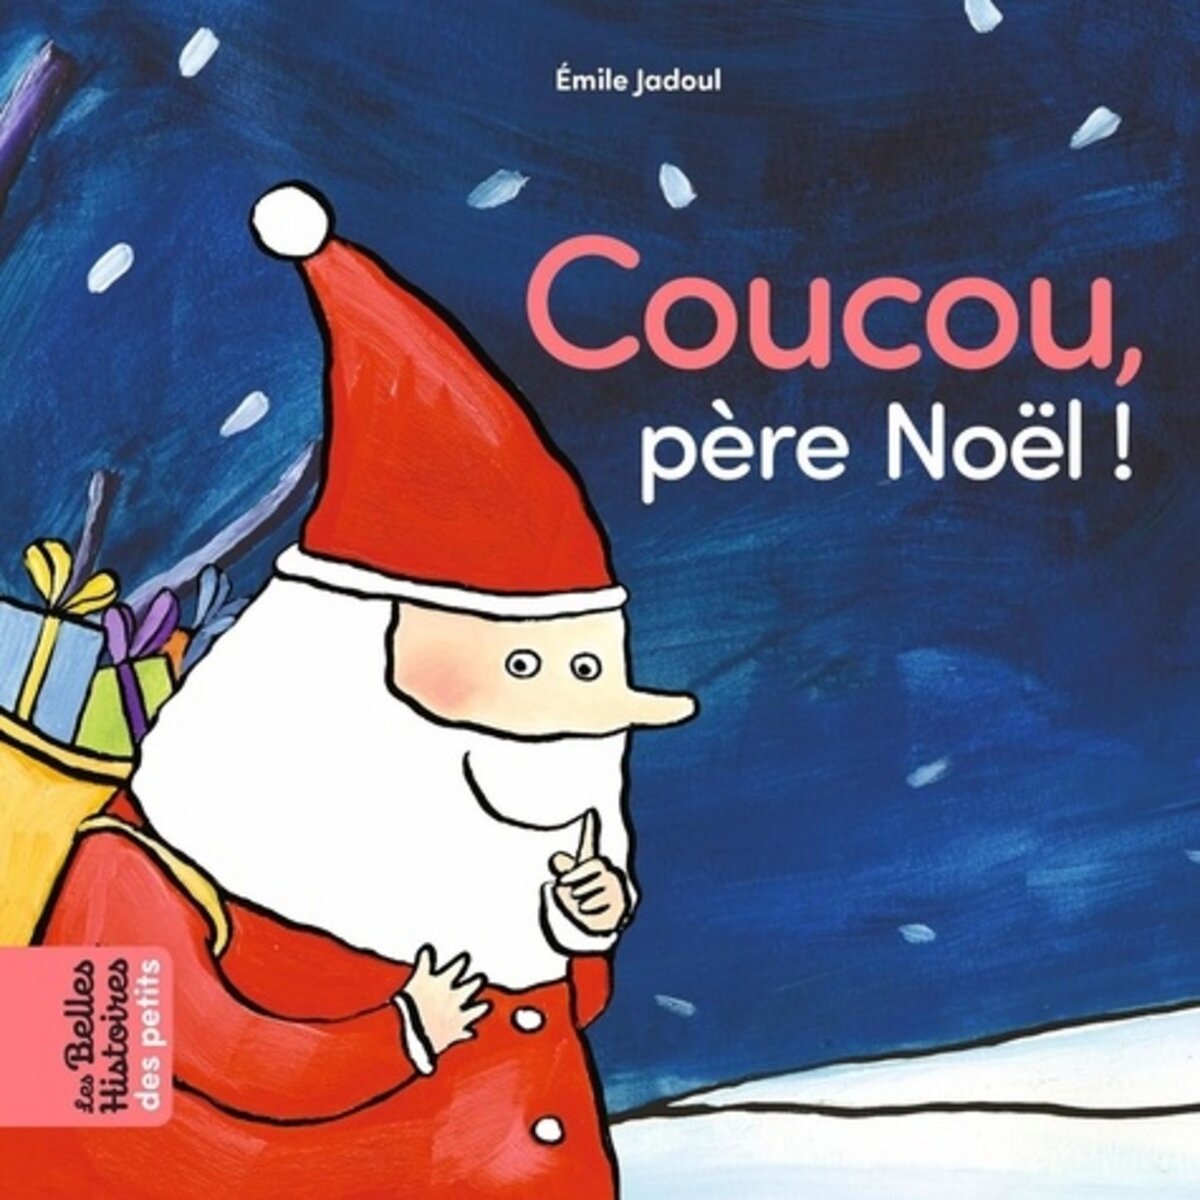  COUCOU, PERE NOEL !, Jadoul Emile